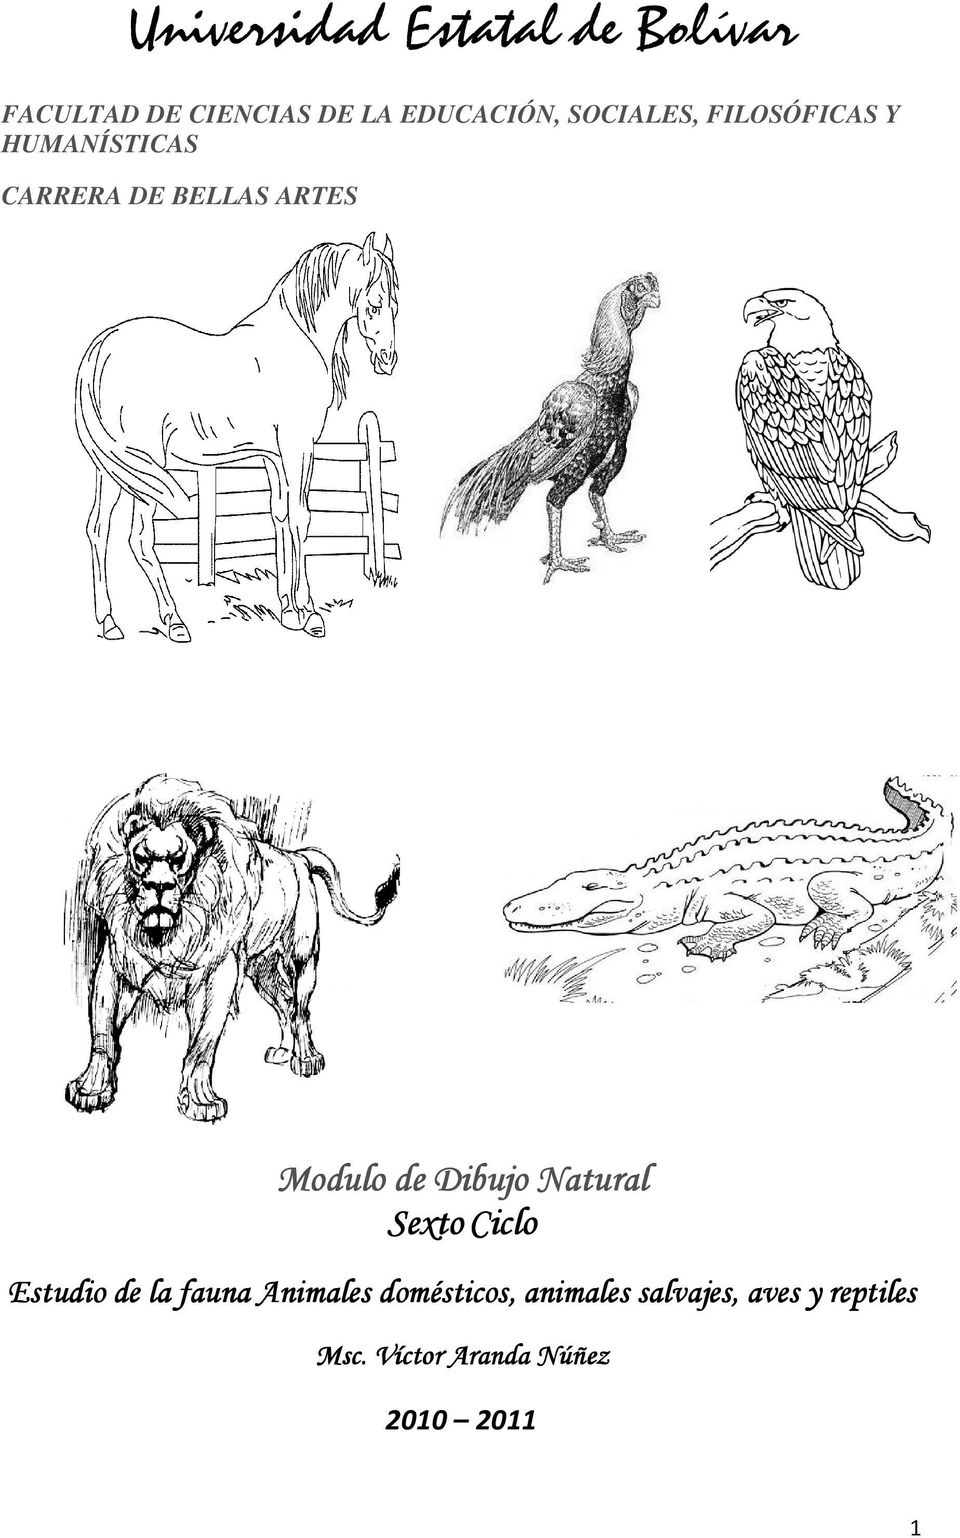 Dibujo Natural Sexto Ciclo Estudio de la fauna Animales domésticos,